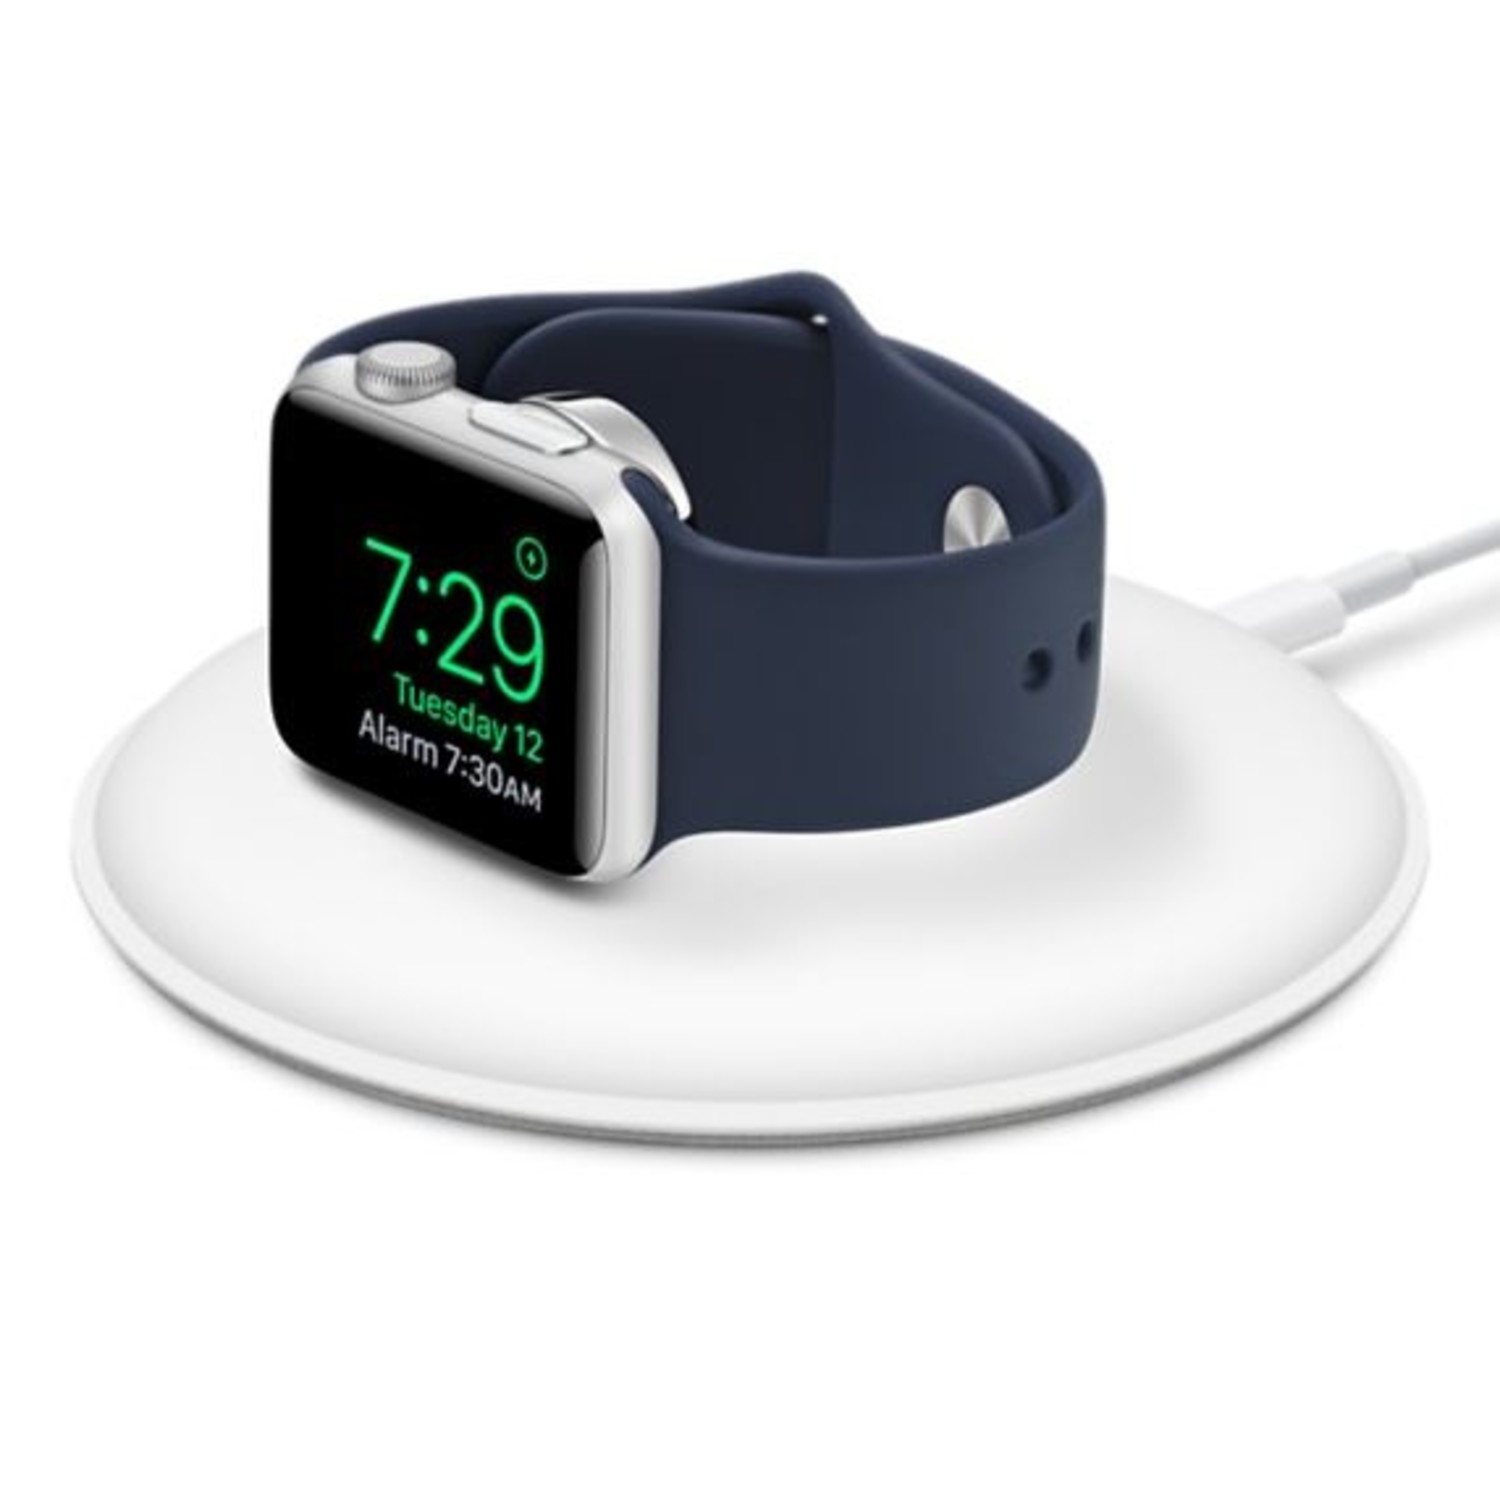 Apple Watch Se Dock Recognized Brands